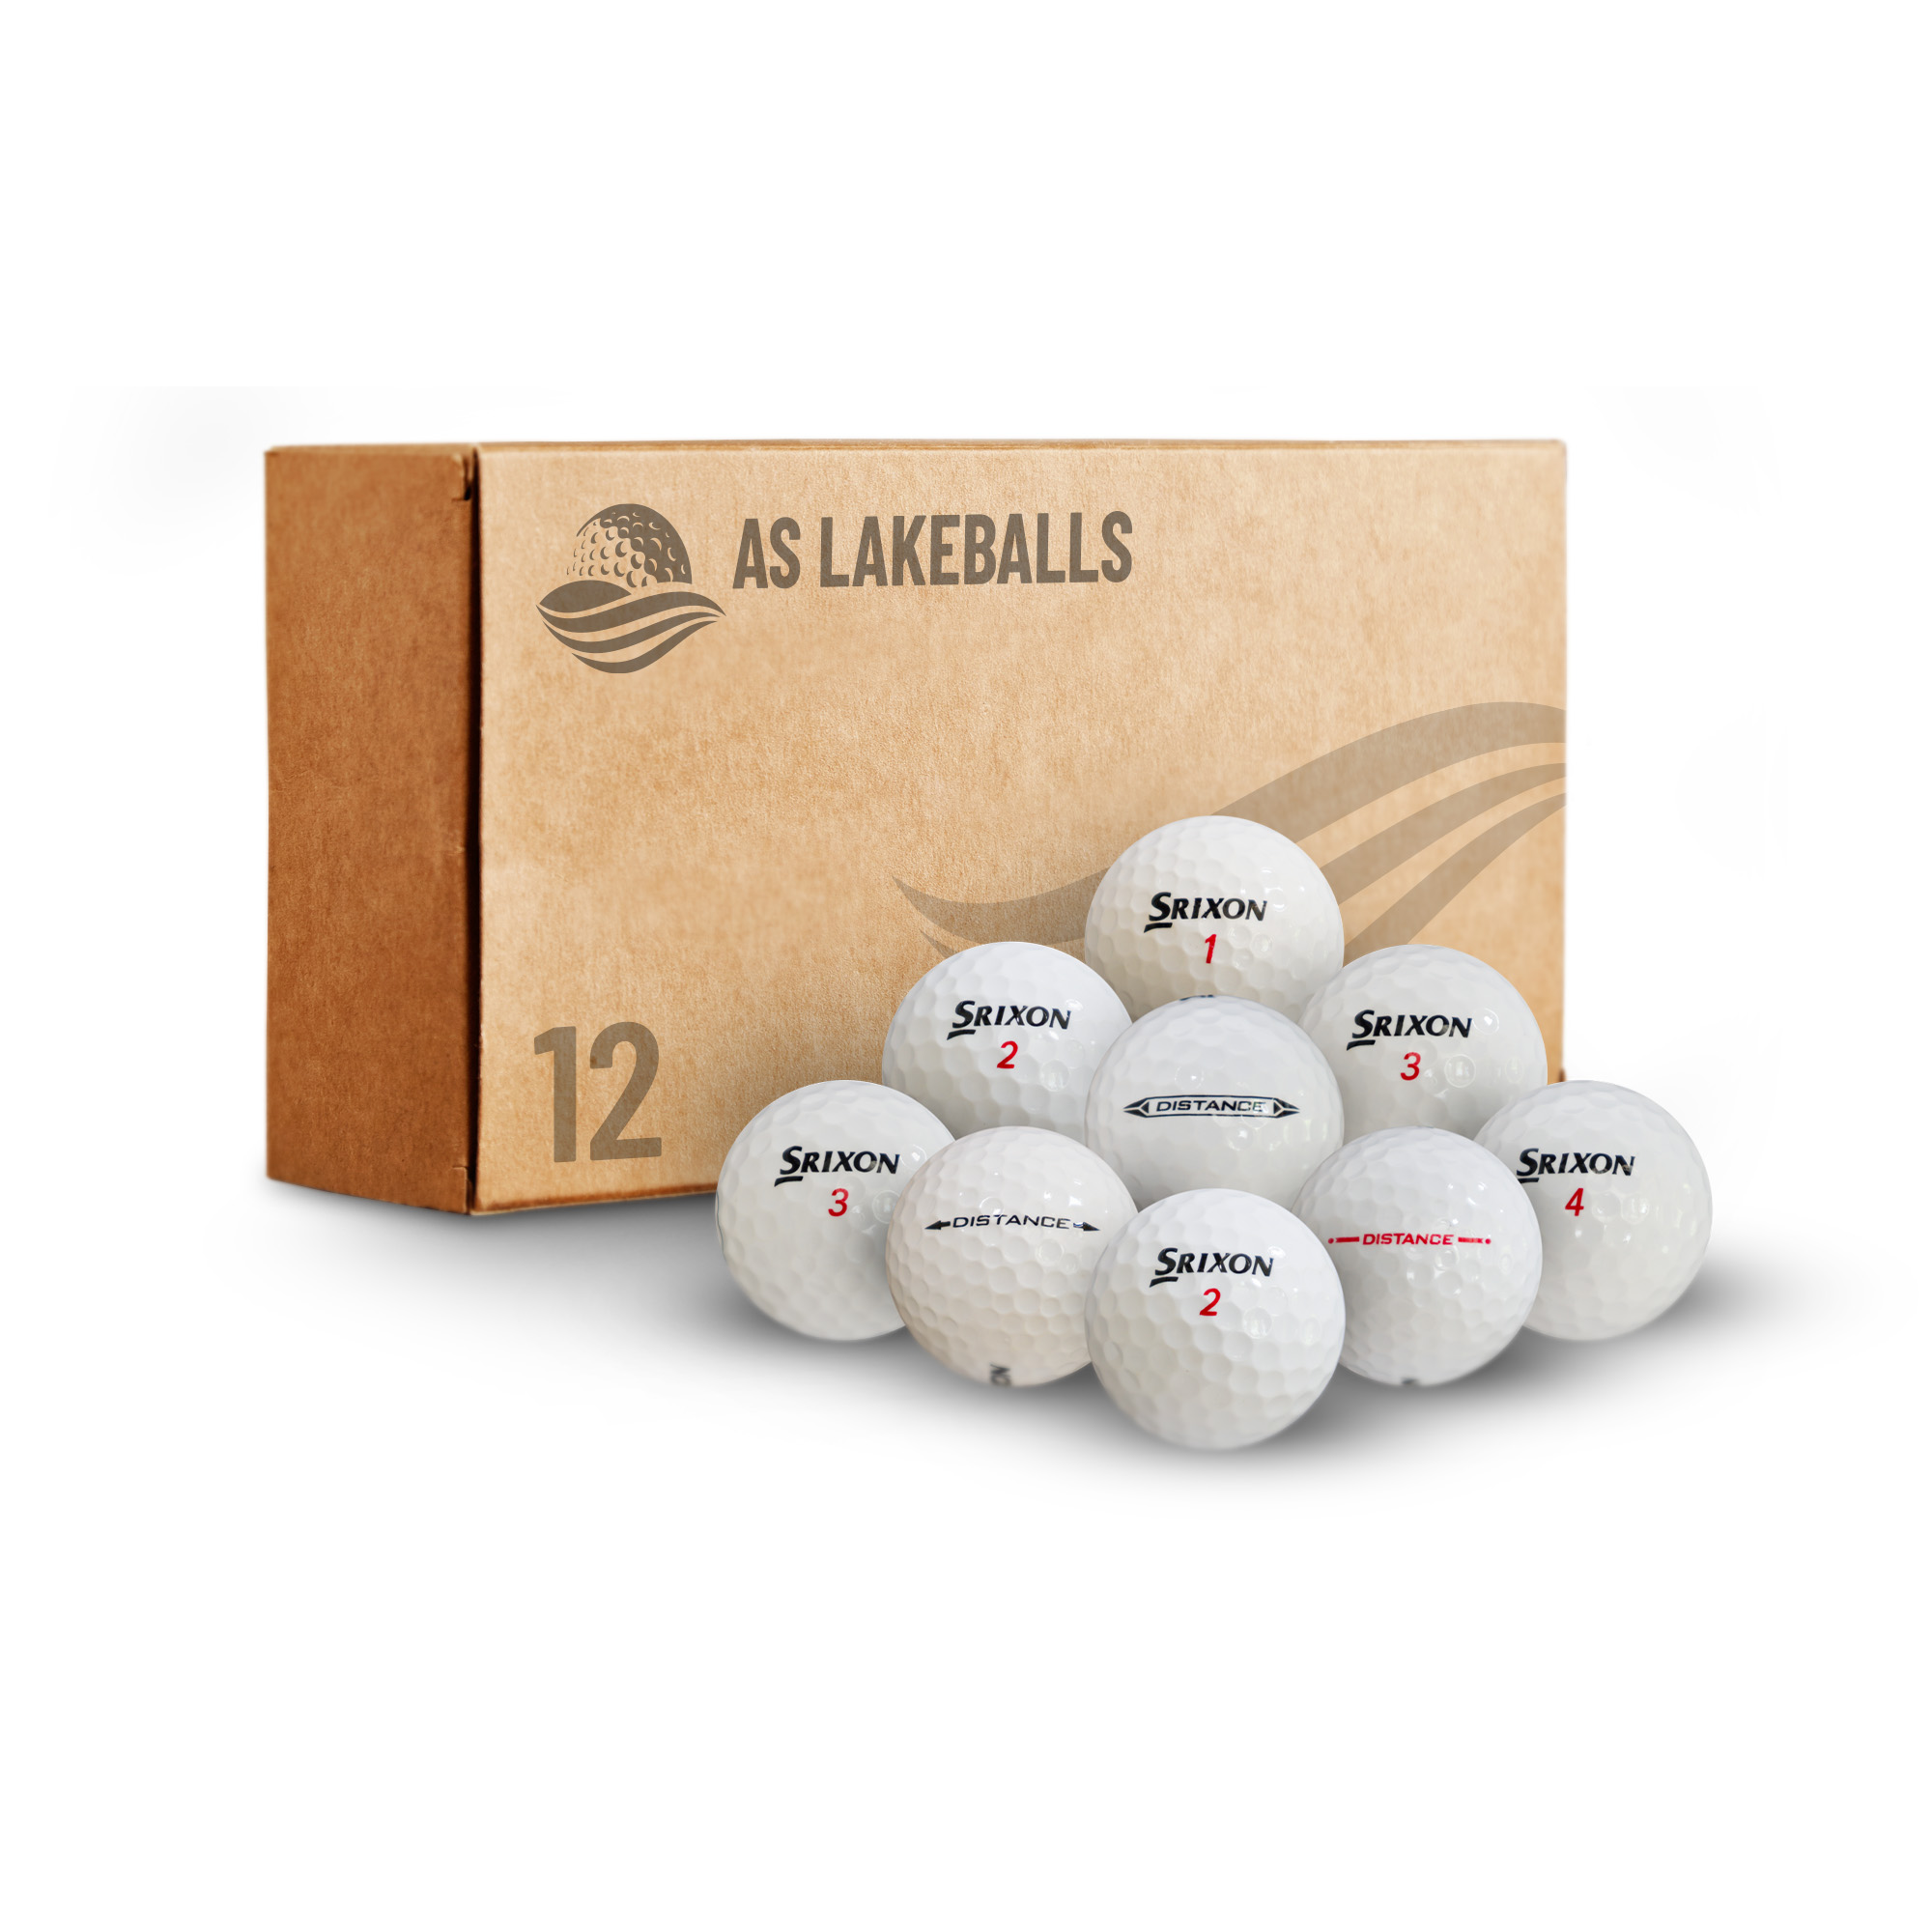 12 Stück Srixon Distance AA Lakeballs